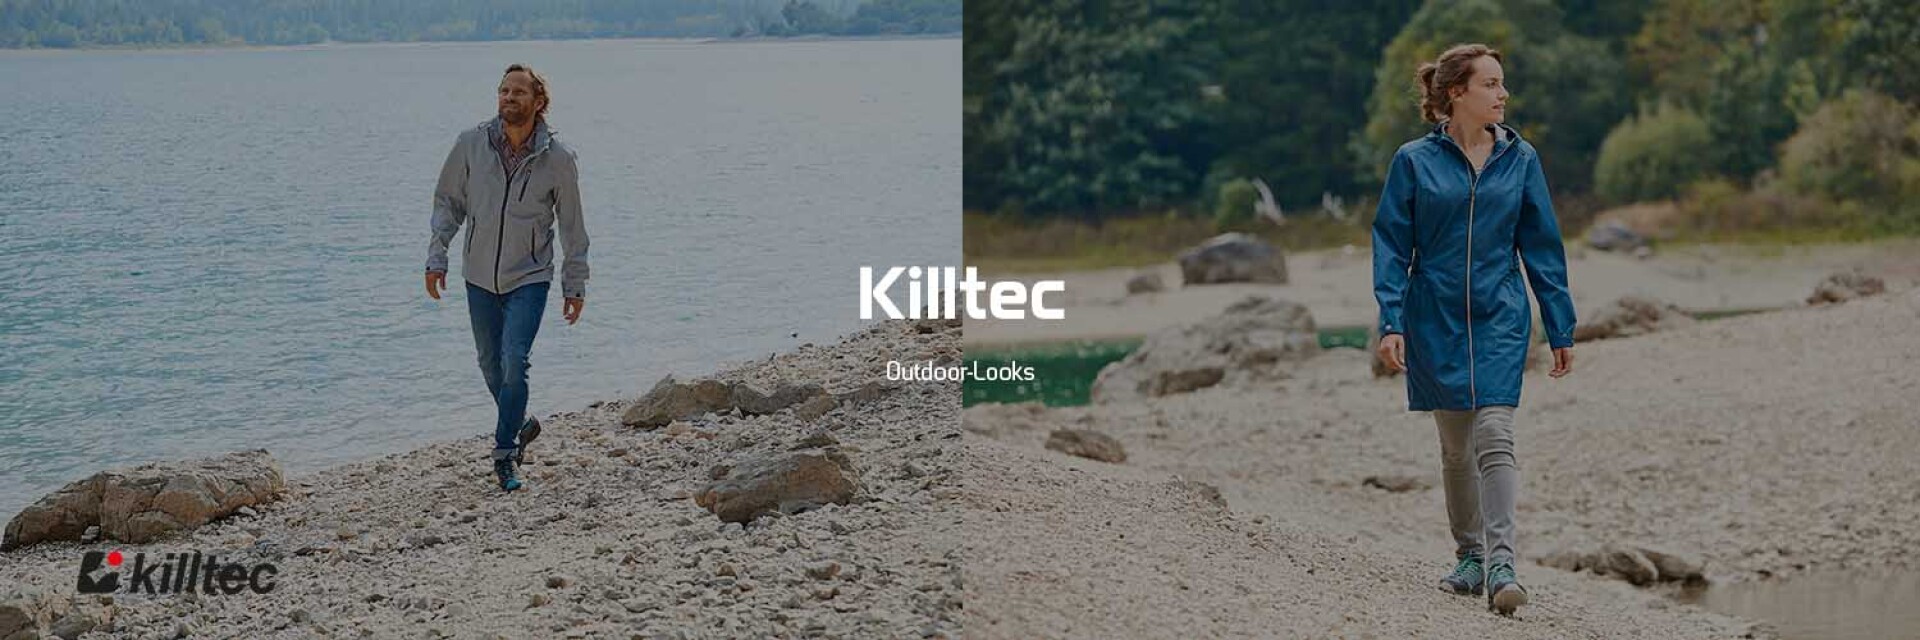 Killtec Outdoor-Look